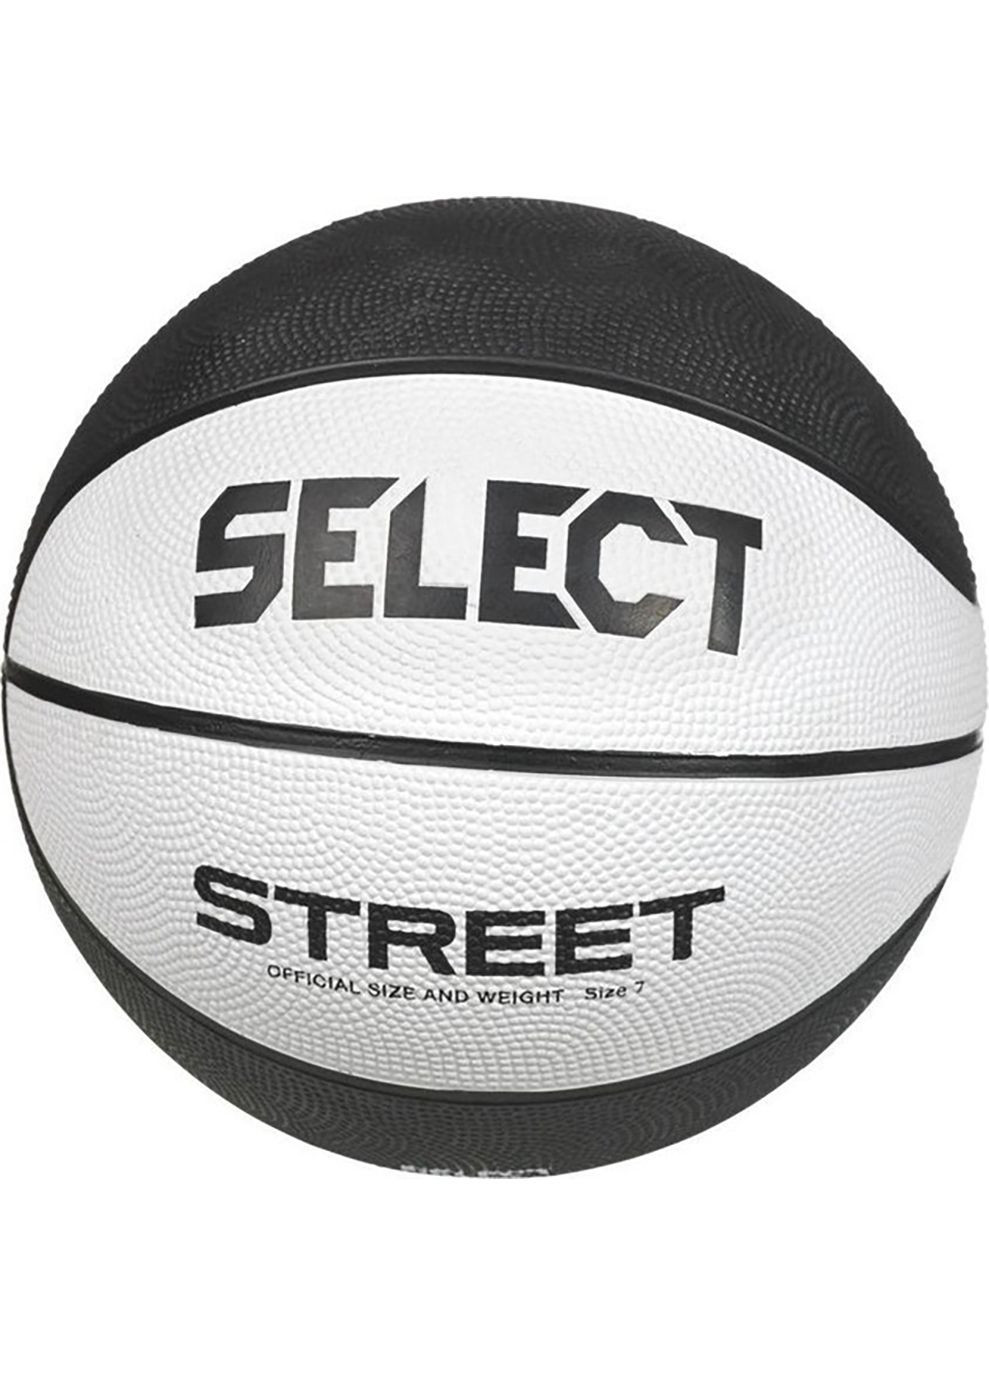 Баскетбольный Мяч BASKETBALL STREET v23 бело-черный Уни 5 Select (282616589)